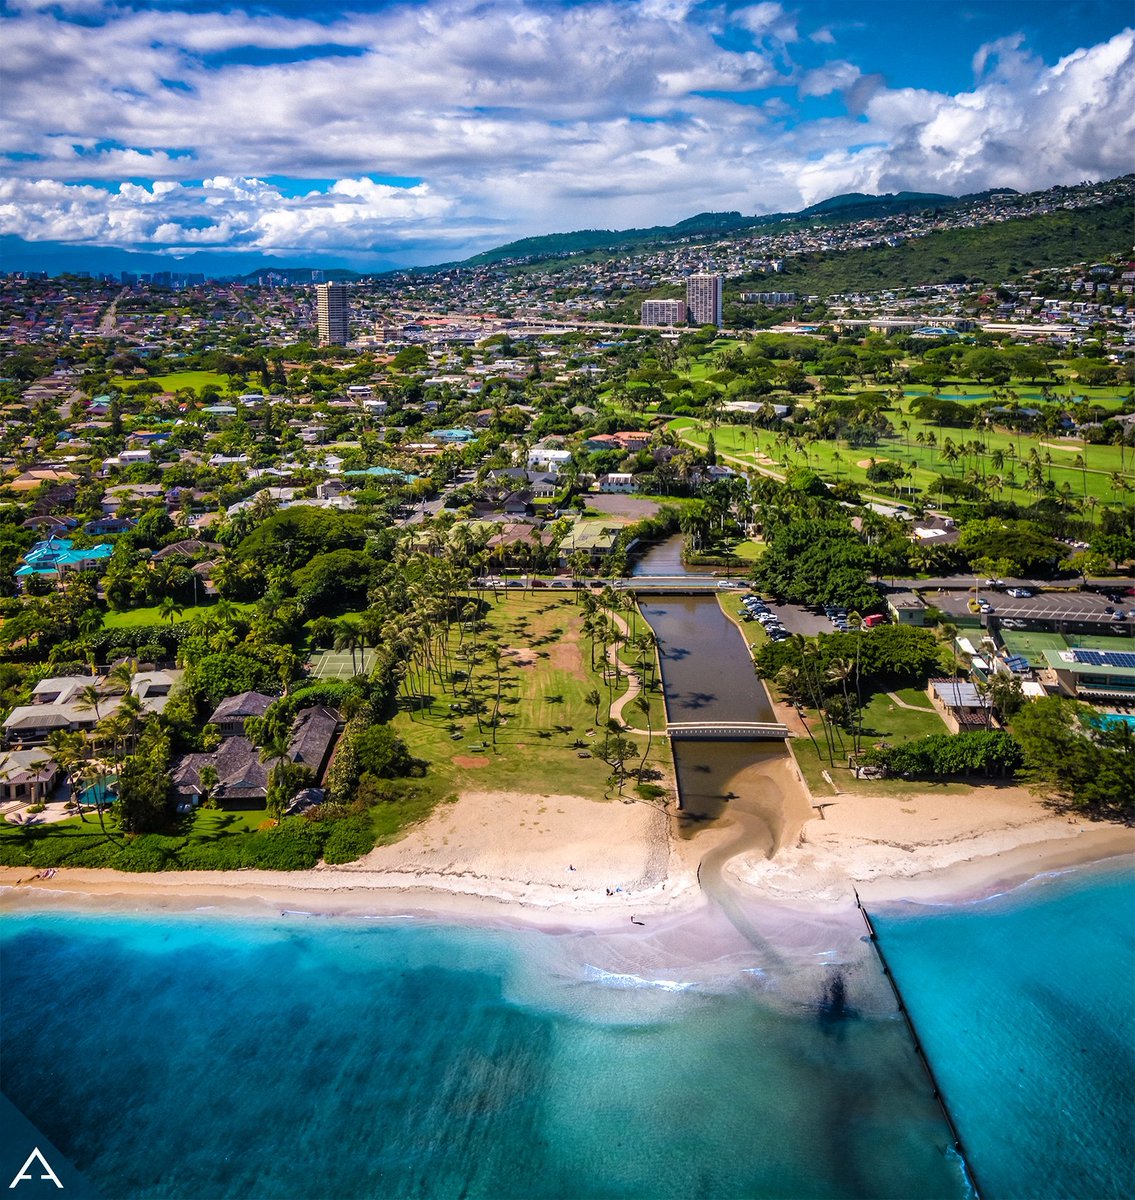 Aloha & Happy Friday everyone!
#dronenerds #dronestyle #dronehawaii #drones #dronephotooftheday #dronephotography #dronephoto #dronephotos #dronelife #dronelovers #dronepov #drones #Hawaii #oahu #honolulu #waialaebeach #islandlife #honolulu #dronepro #airzus #suas #UAV #